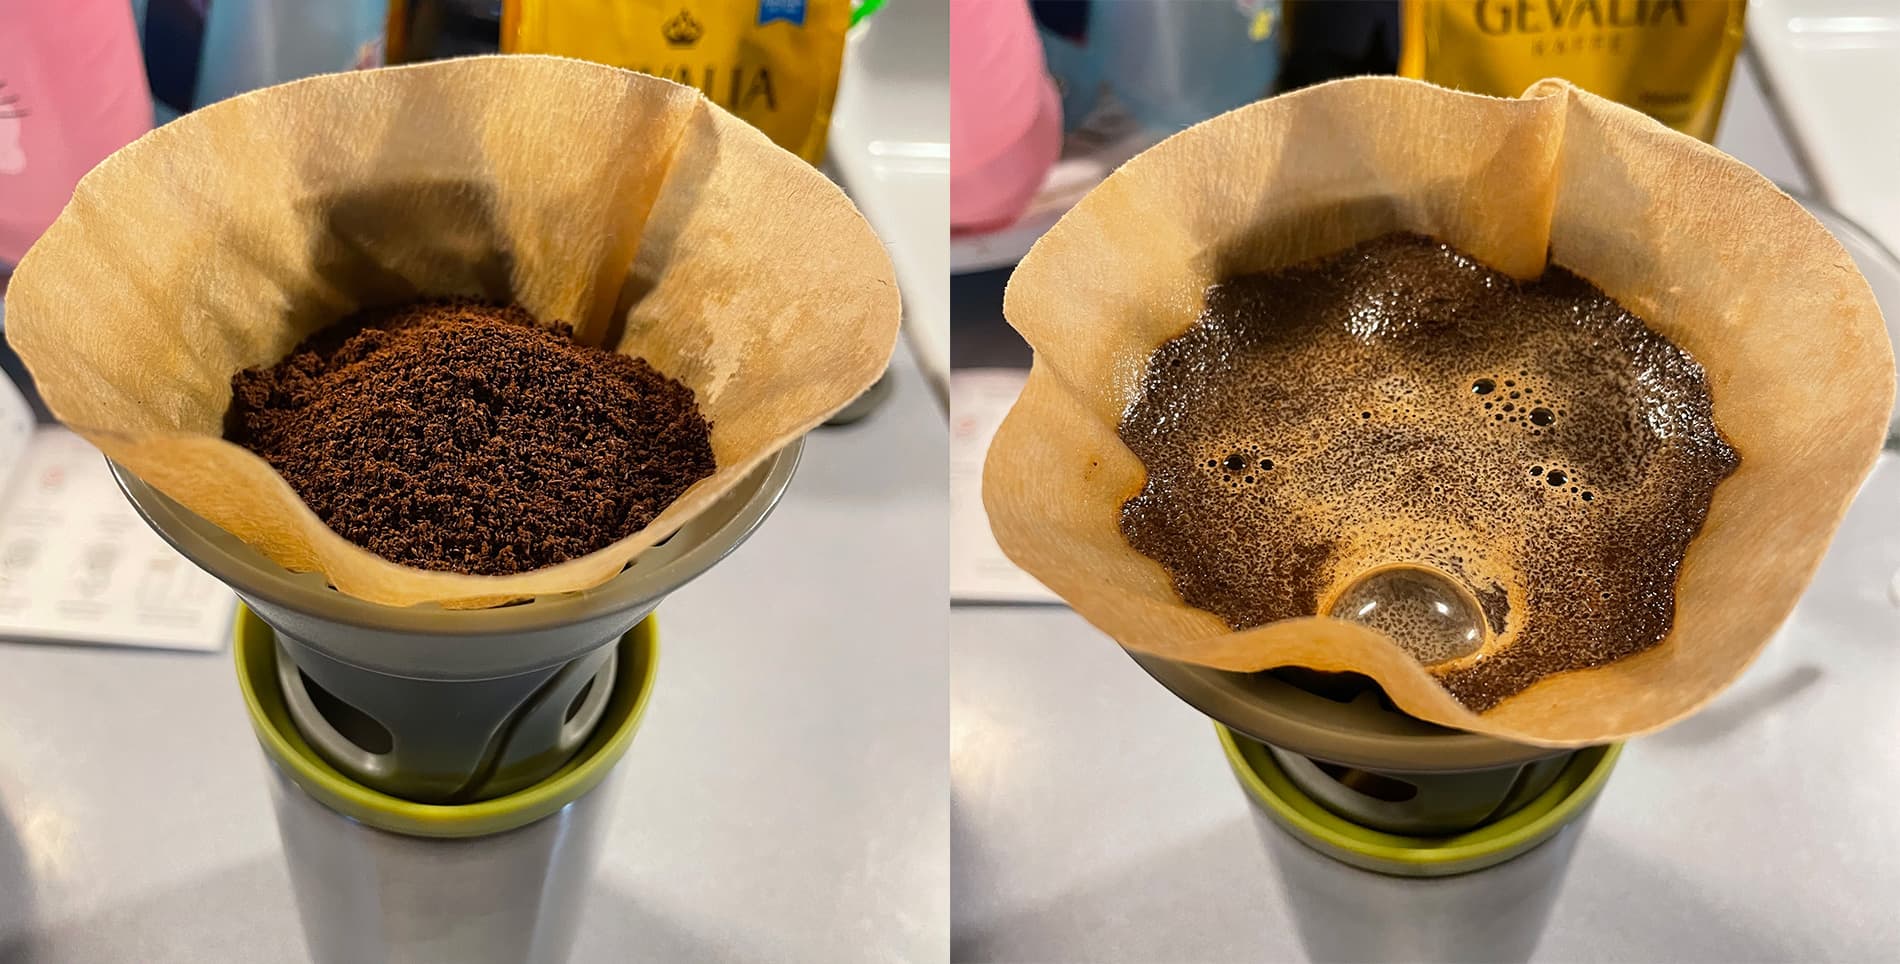 https://the-gadgeteer.com/wp-content/uploads/2020/12/Wacaco-Cuppamoka-coffee-maker-03.jpg